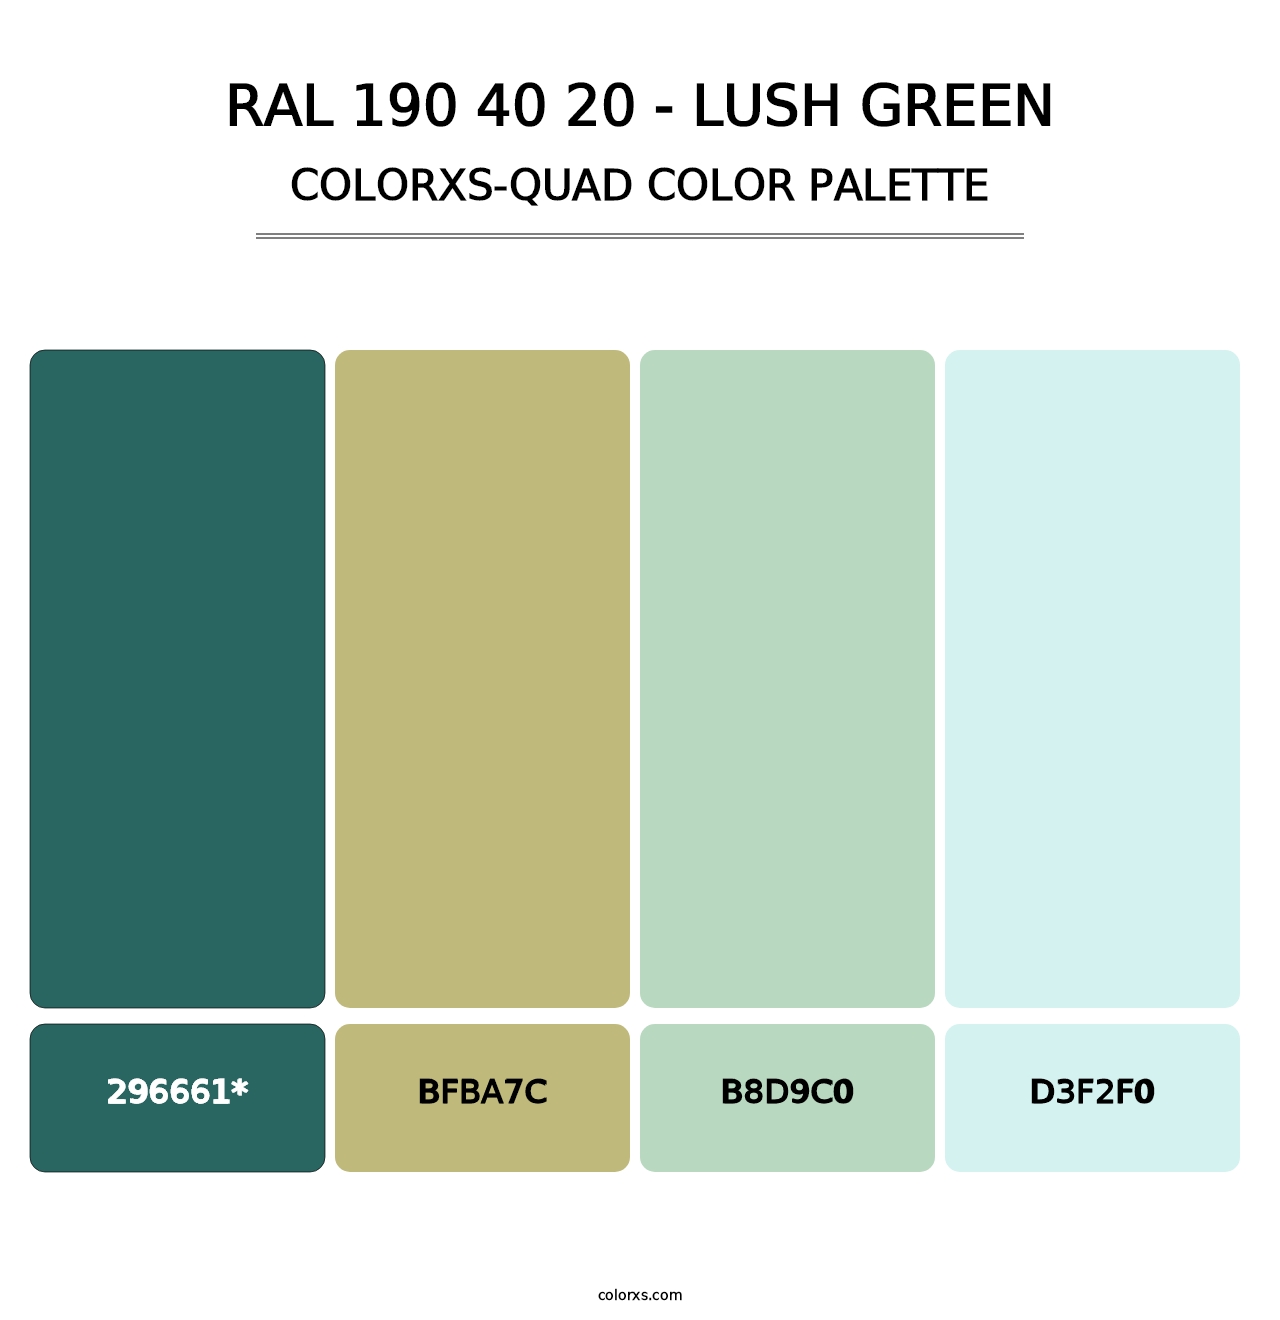 RAL 190 40 20 - Lush Green - Colorxs Quad Palette